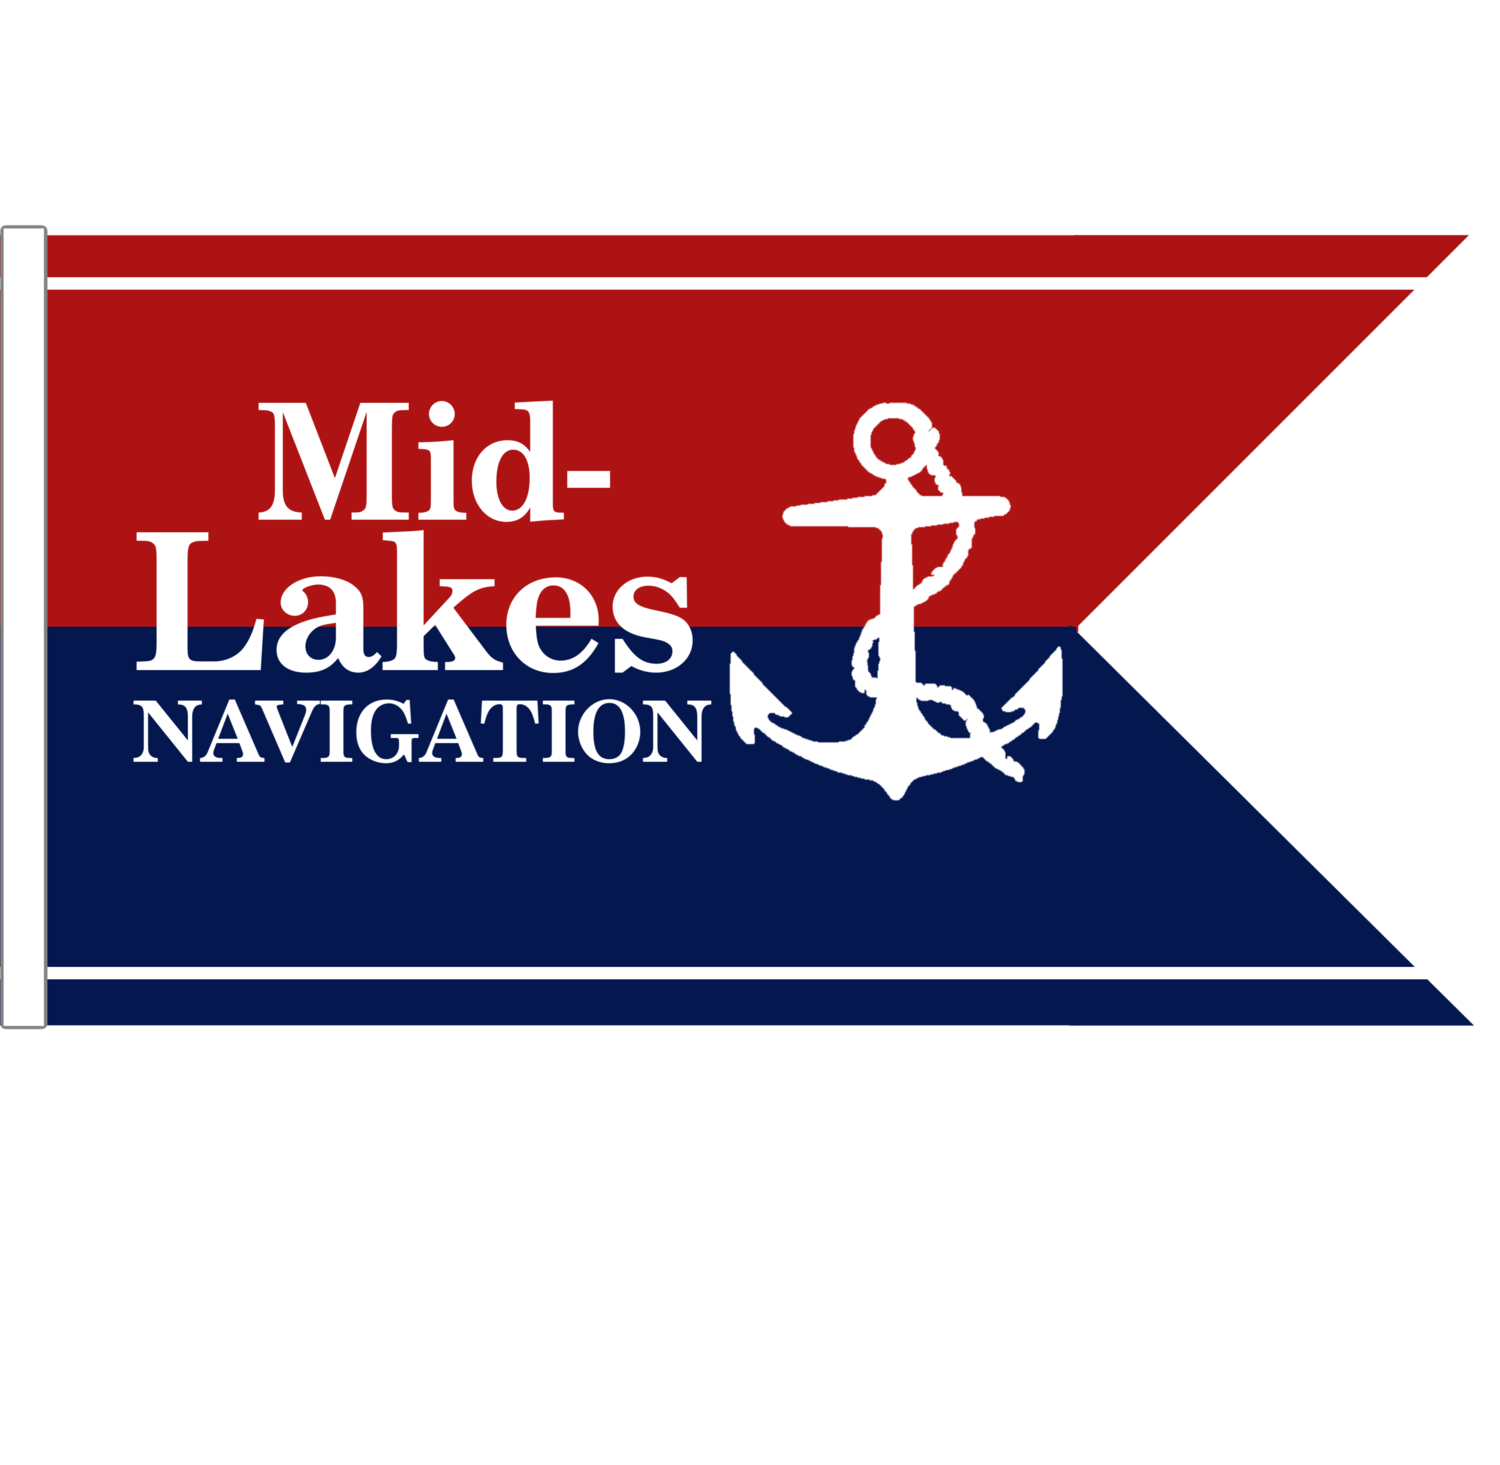 Midlakes Navigation